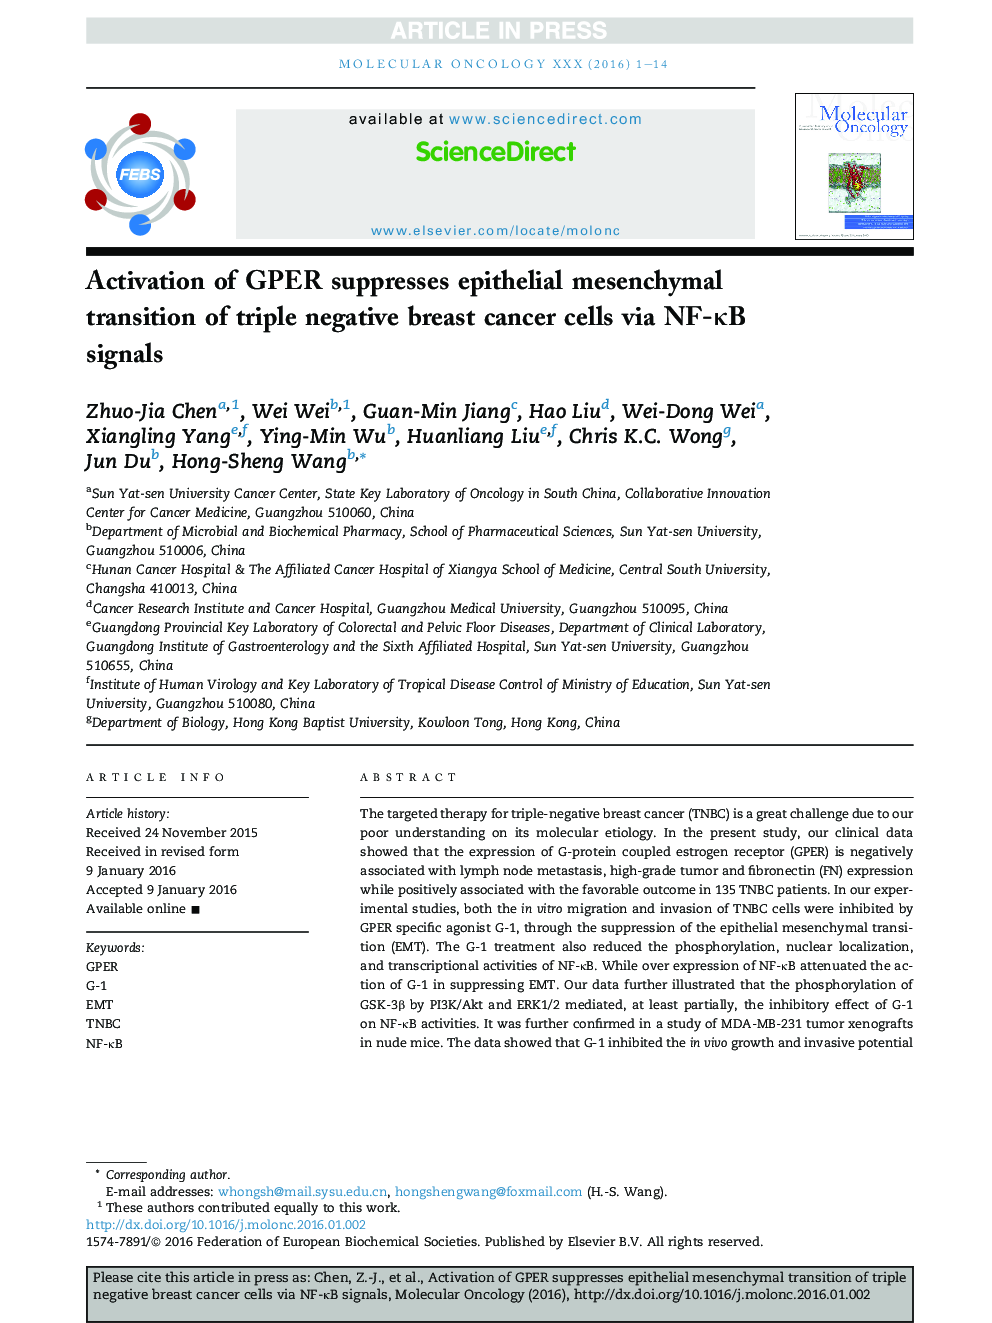 Activation of GPER suppresses epithelial mesenchymal transition of triple negative breast cancer cells via NF-ÎºB signals